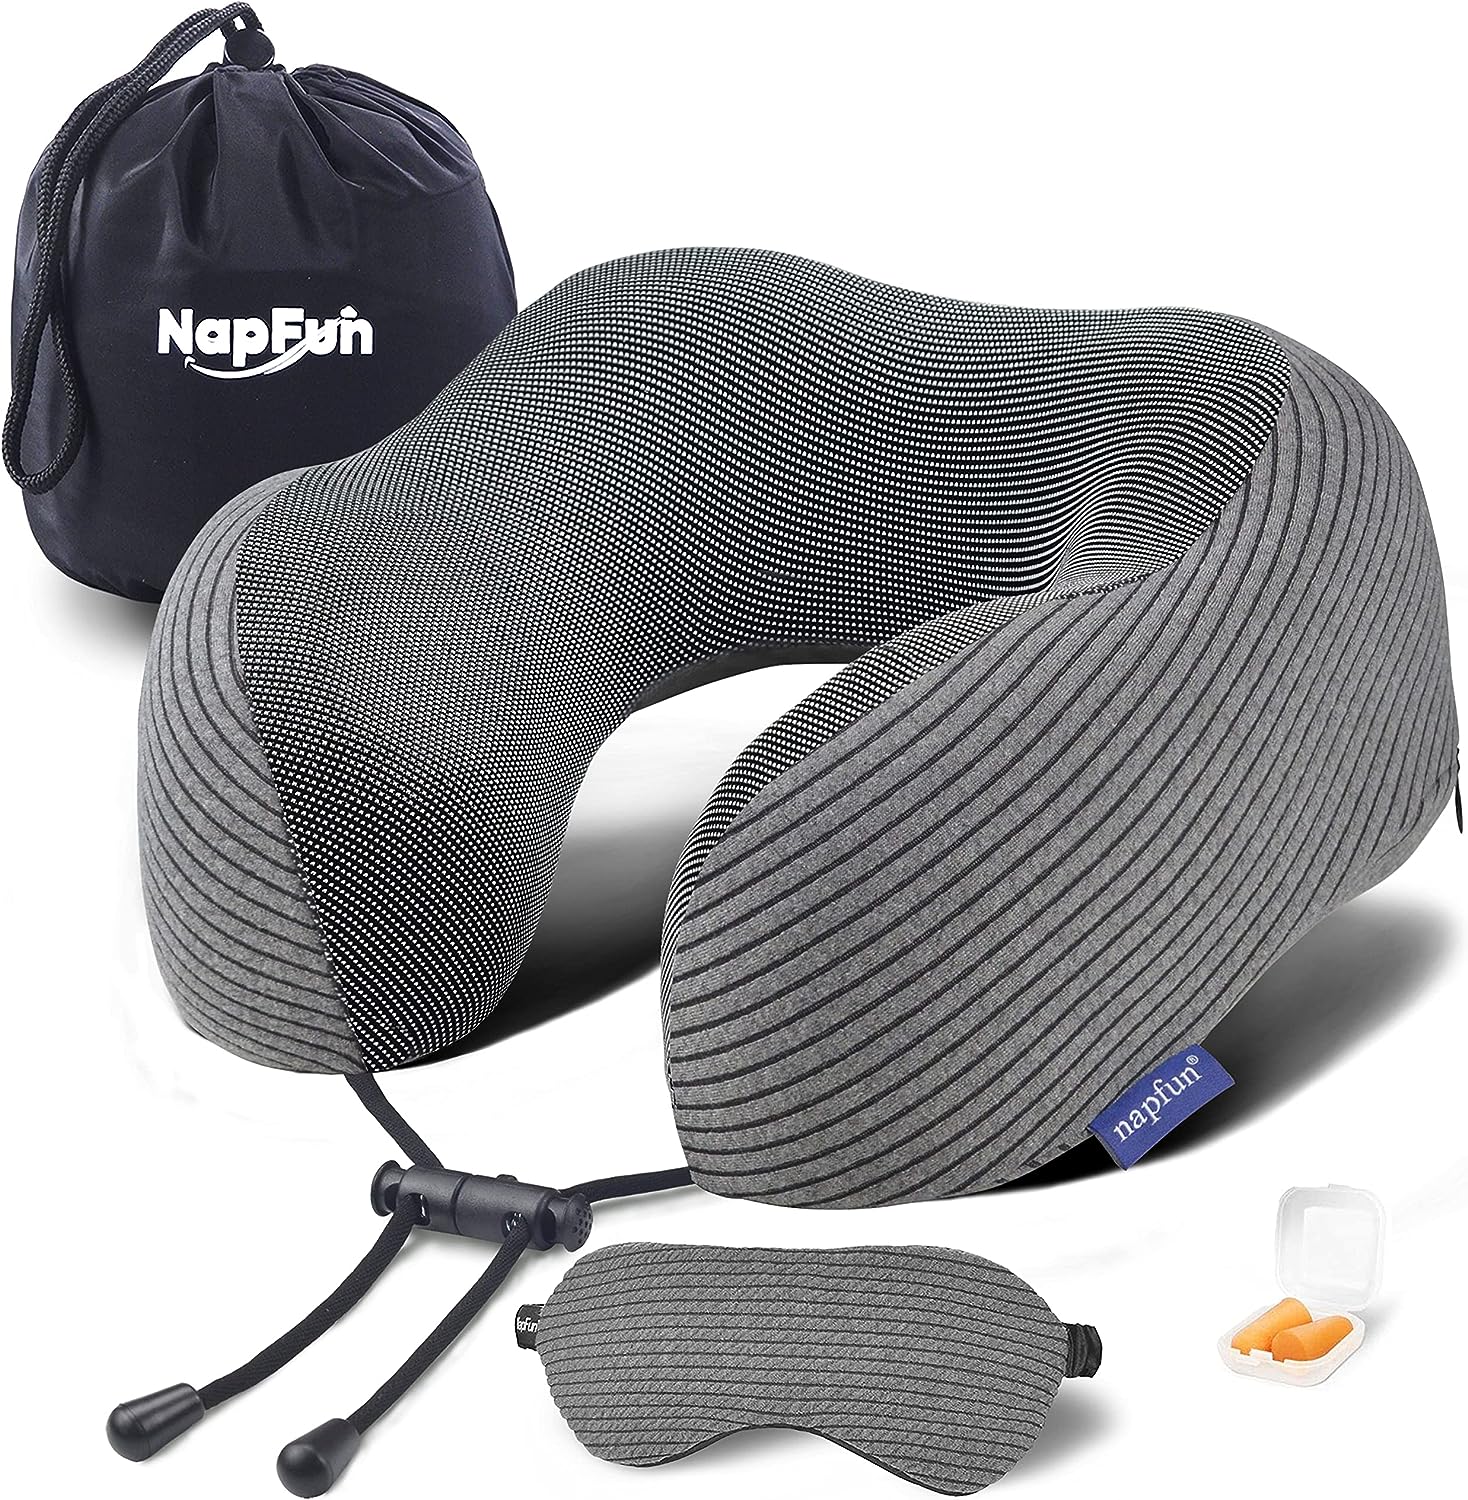  napfun Travel Pillow, 100% Pure Memory Foam Neck Pillows for Travel Airplane Headrest Flight Plane Accessories, Deep Grey, Medium (120-200LB)